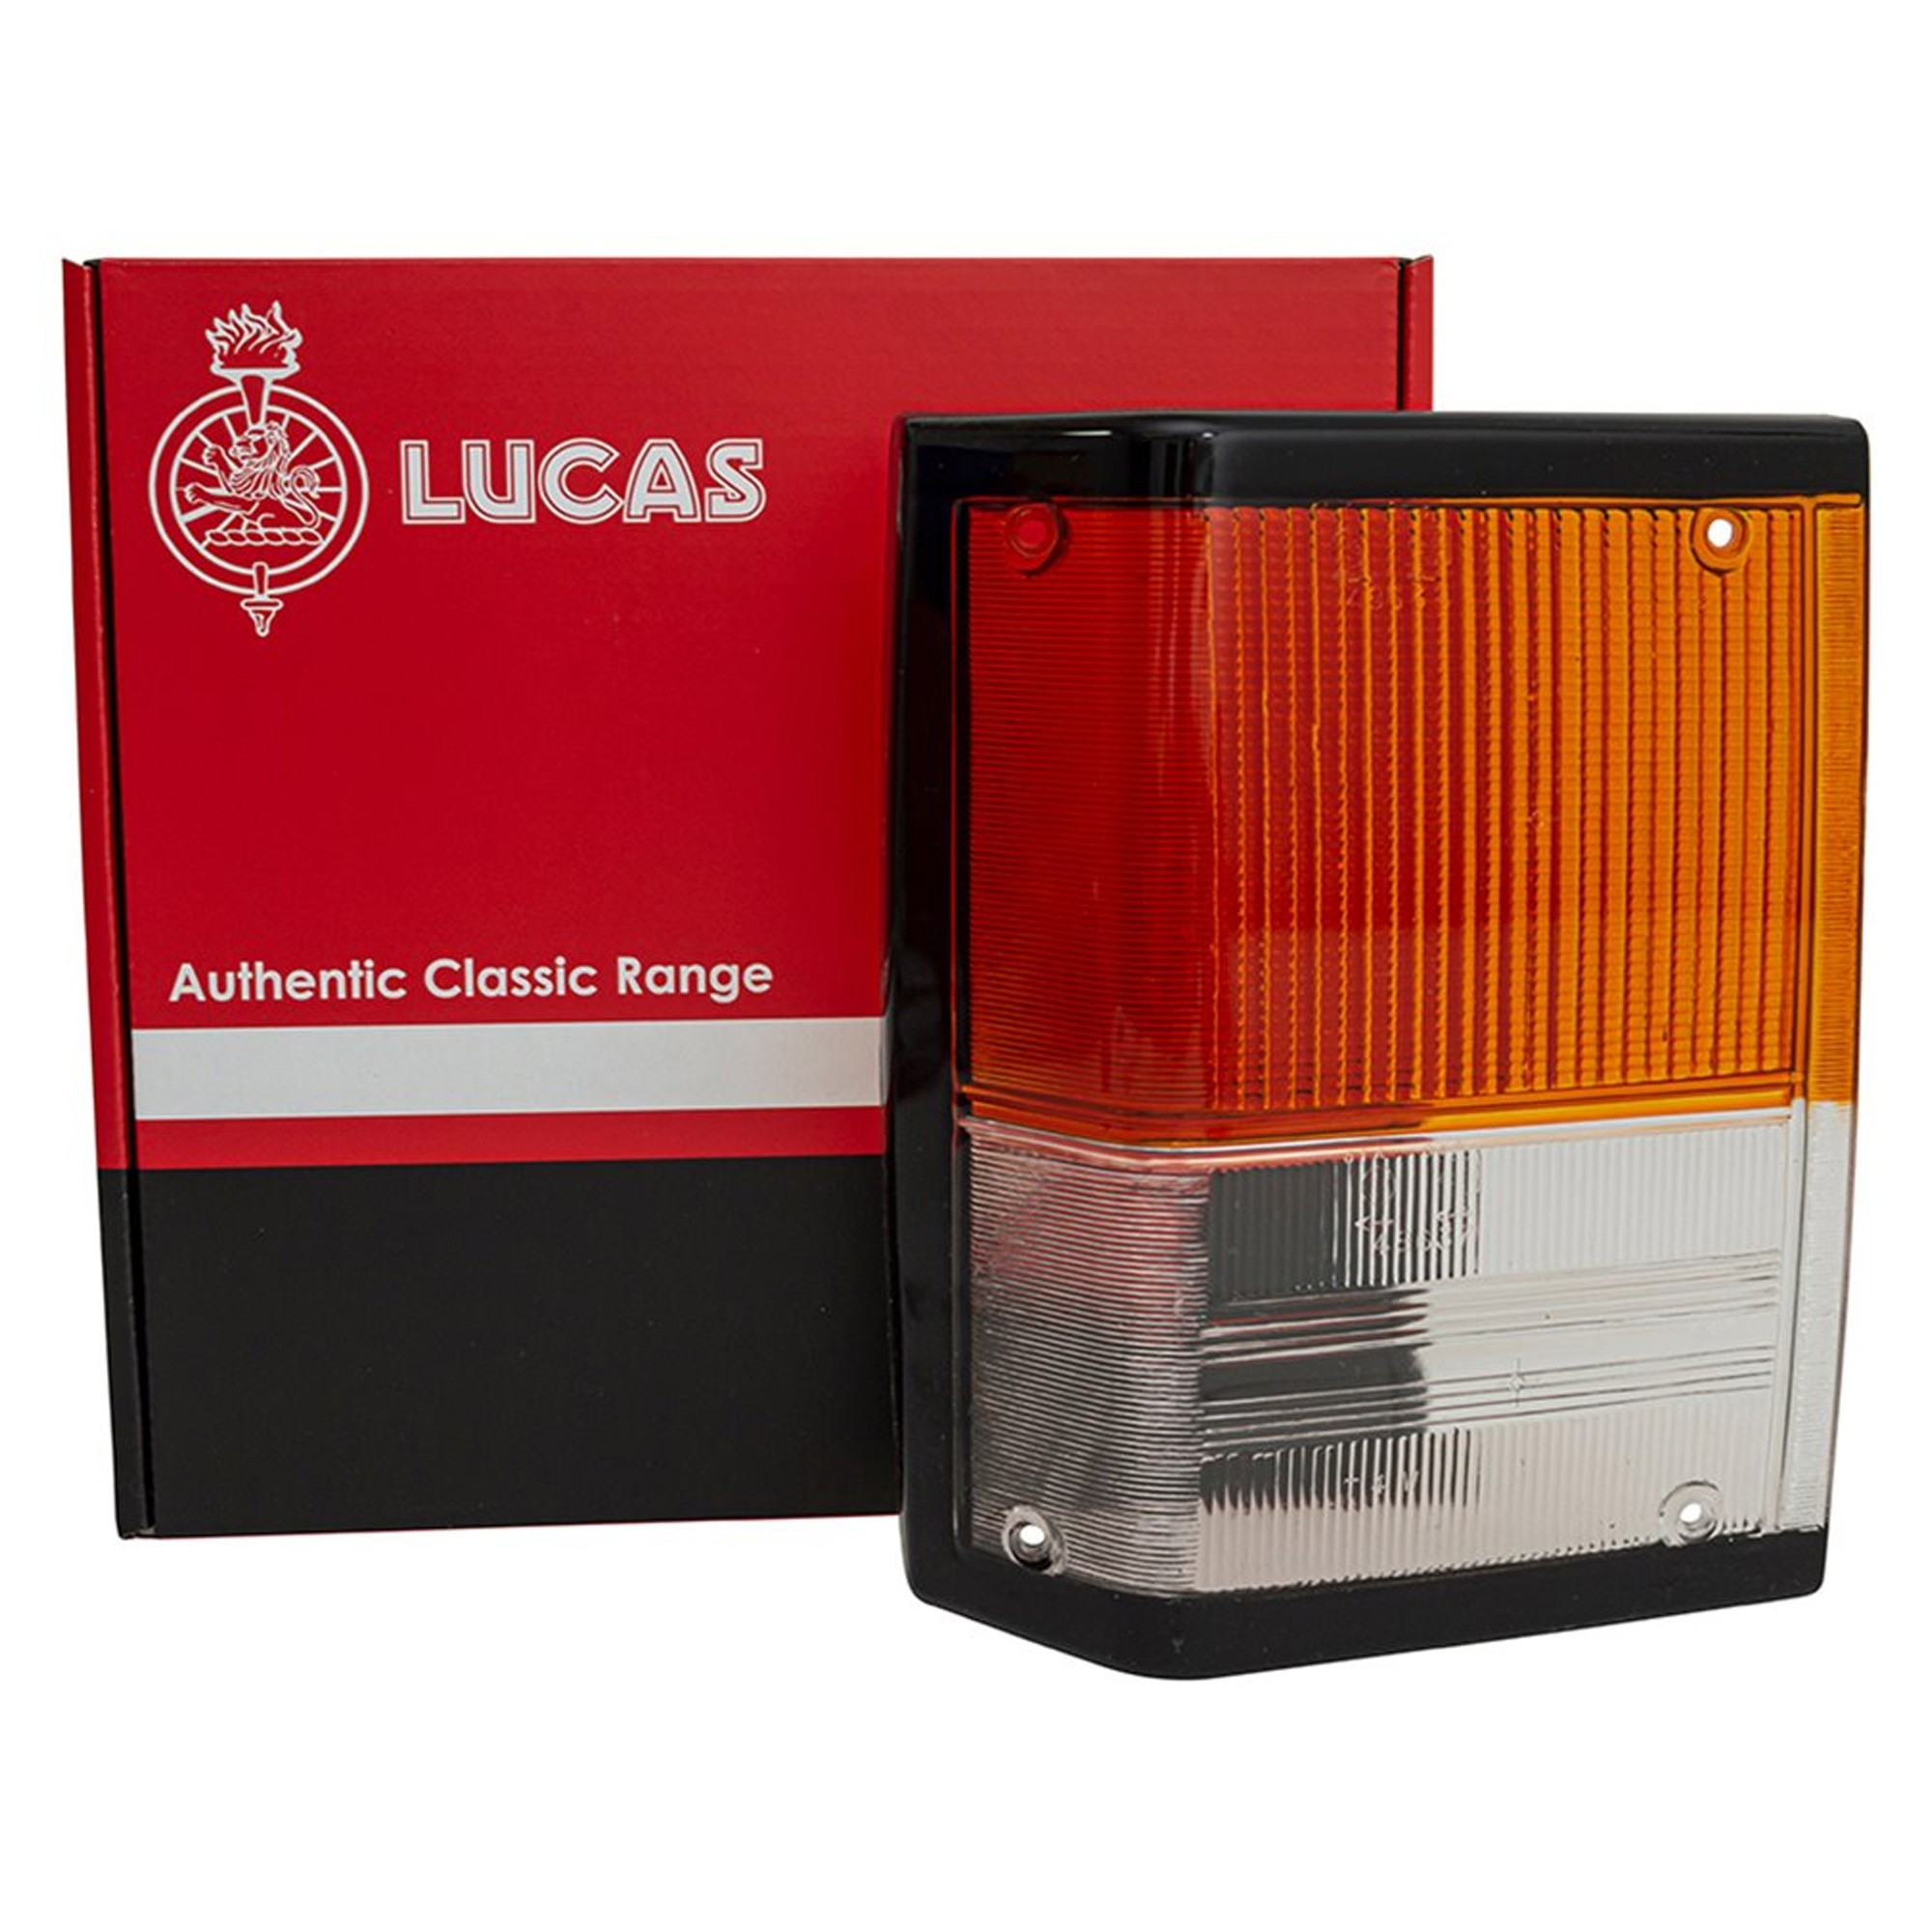 Kabelbane vejkryds procedure AEU1610 - Lucas Lens Front R/H Side and Indicator Range Rover Classic